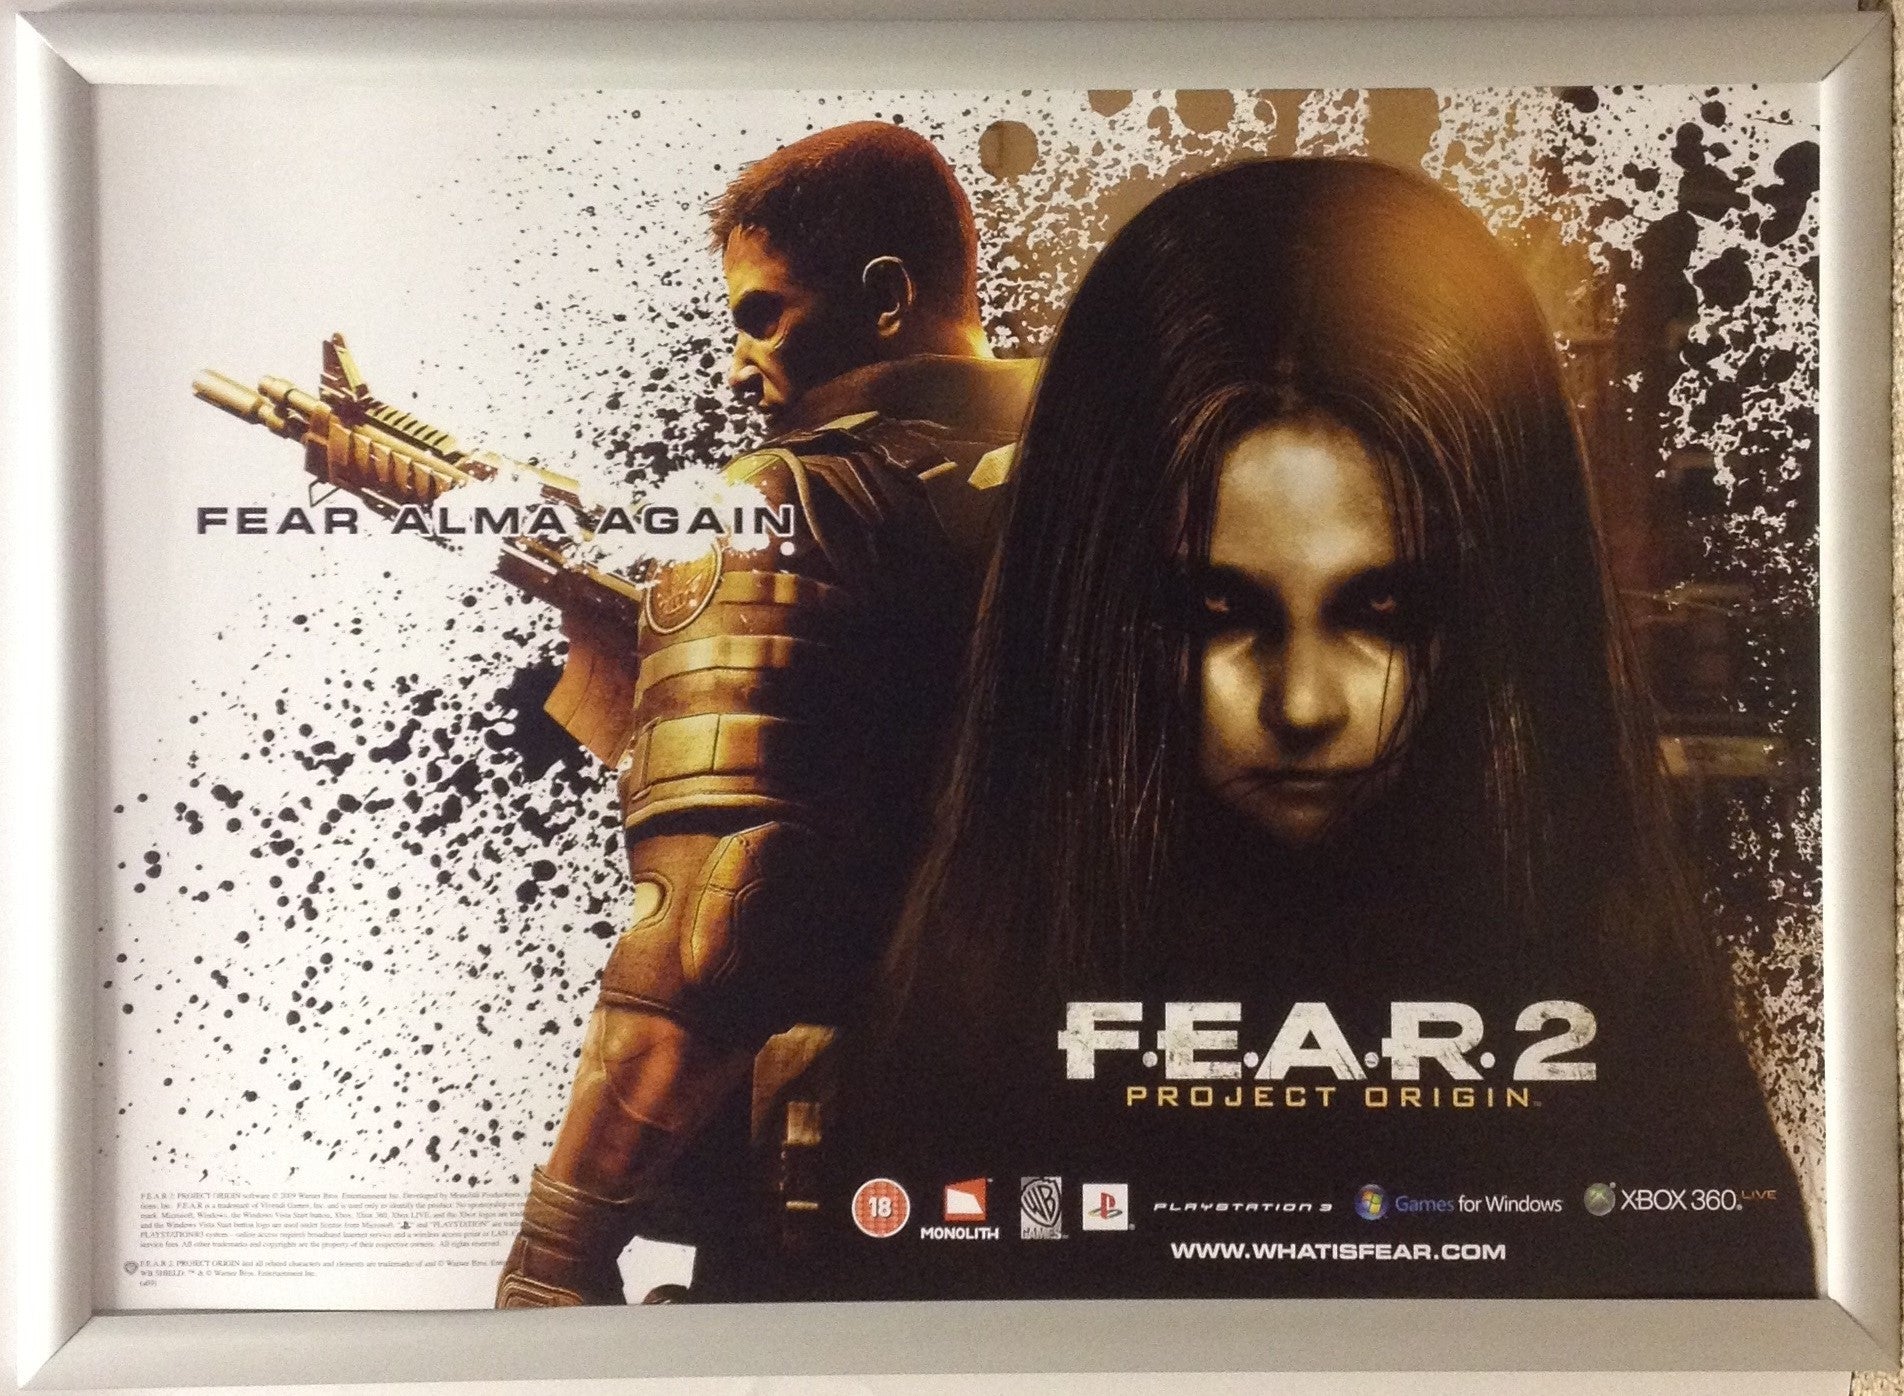 F.E.A.R 2 Project Origin (A2) Promotional Poster #2